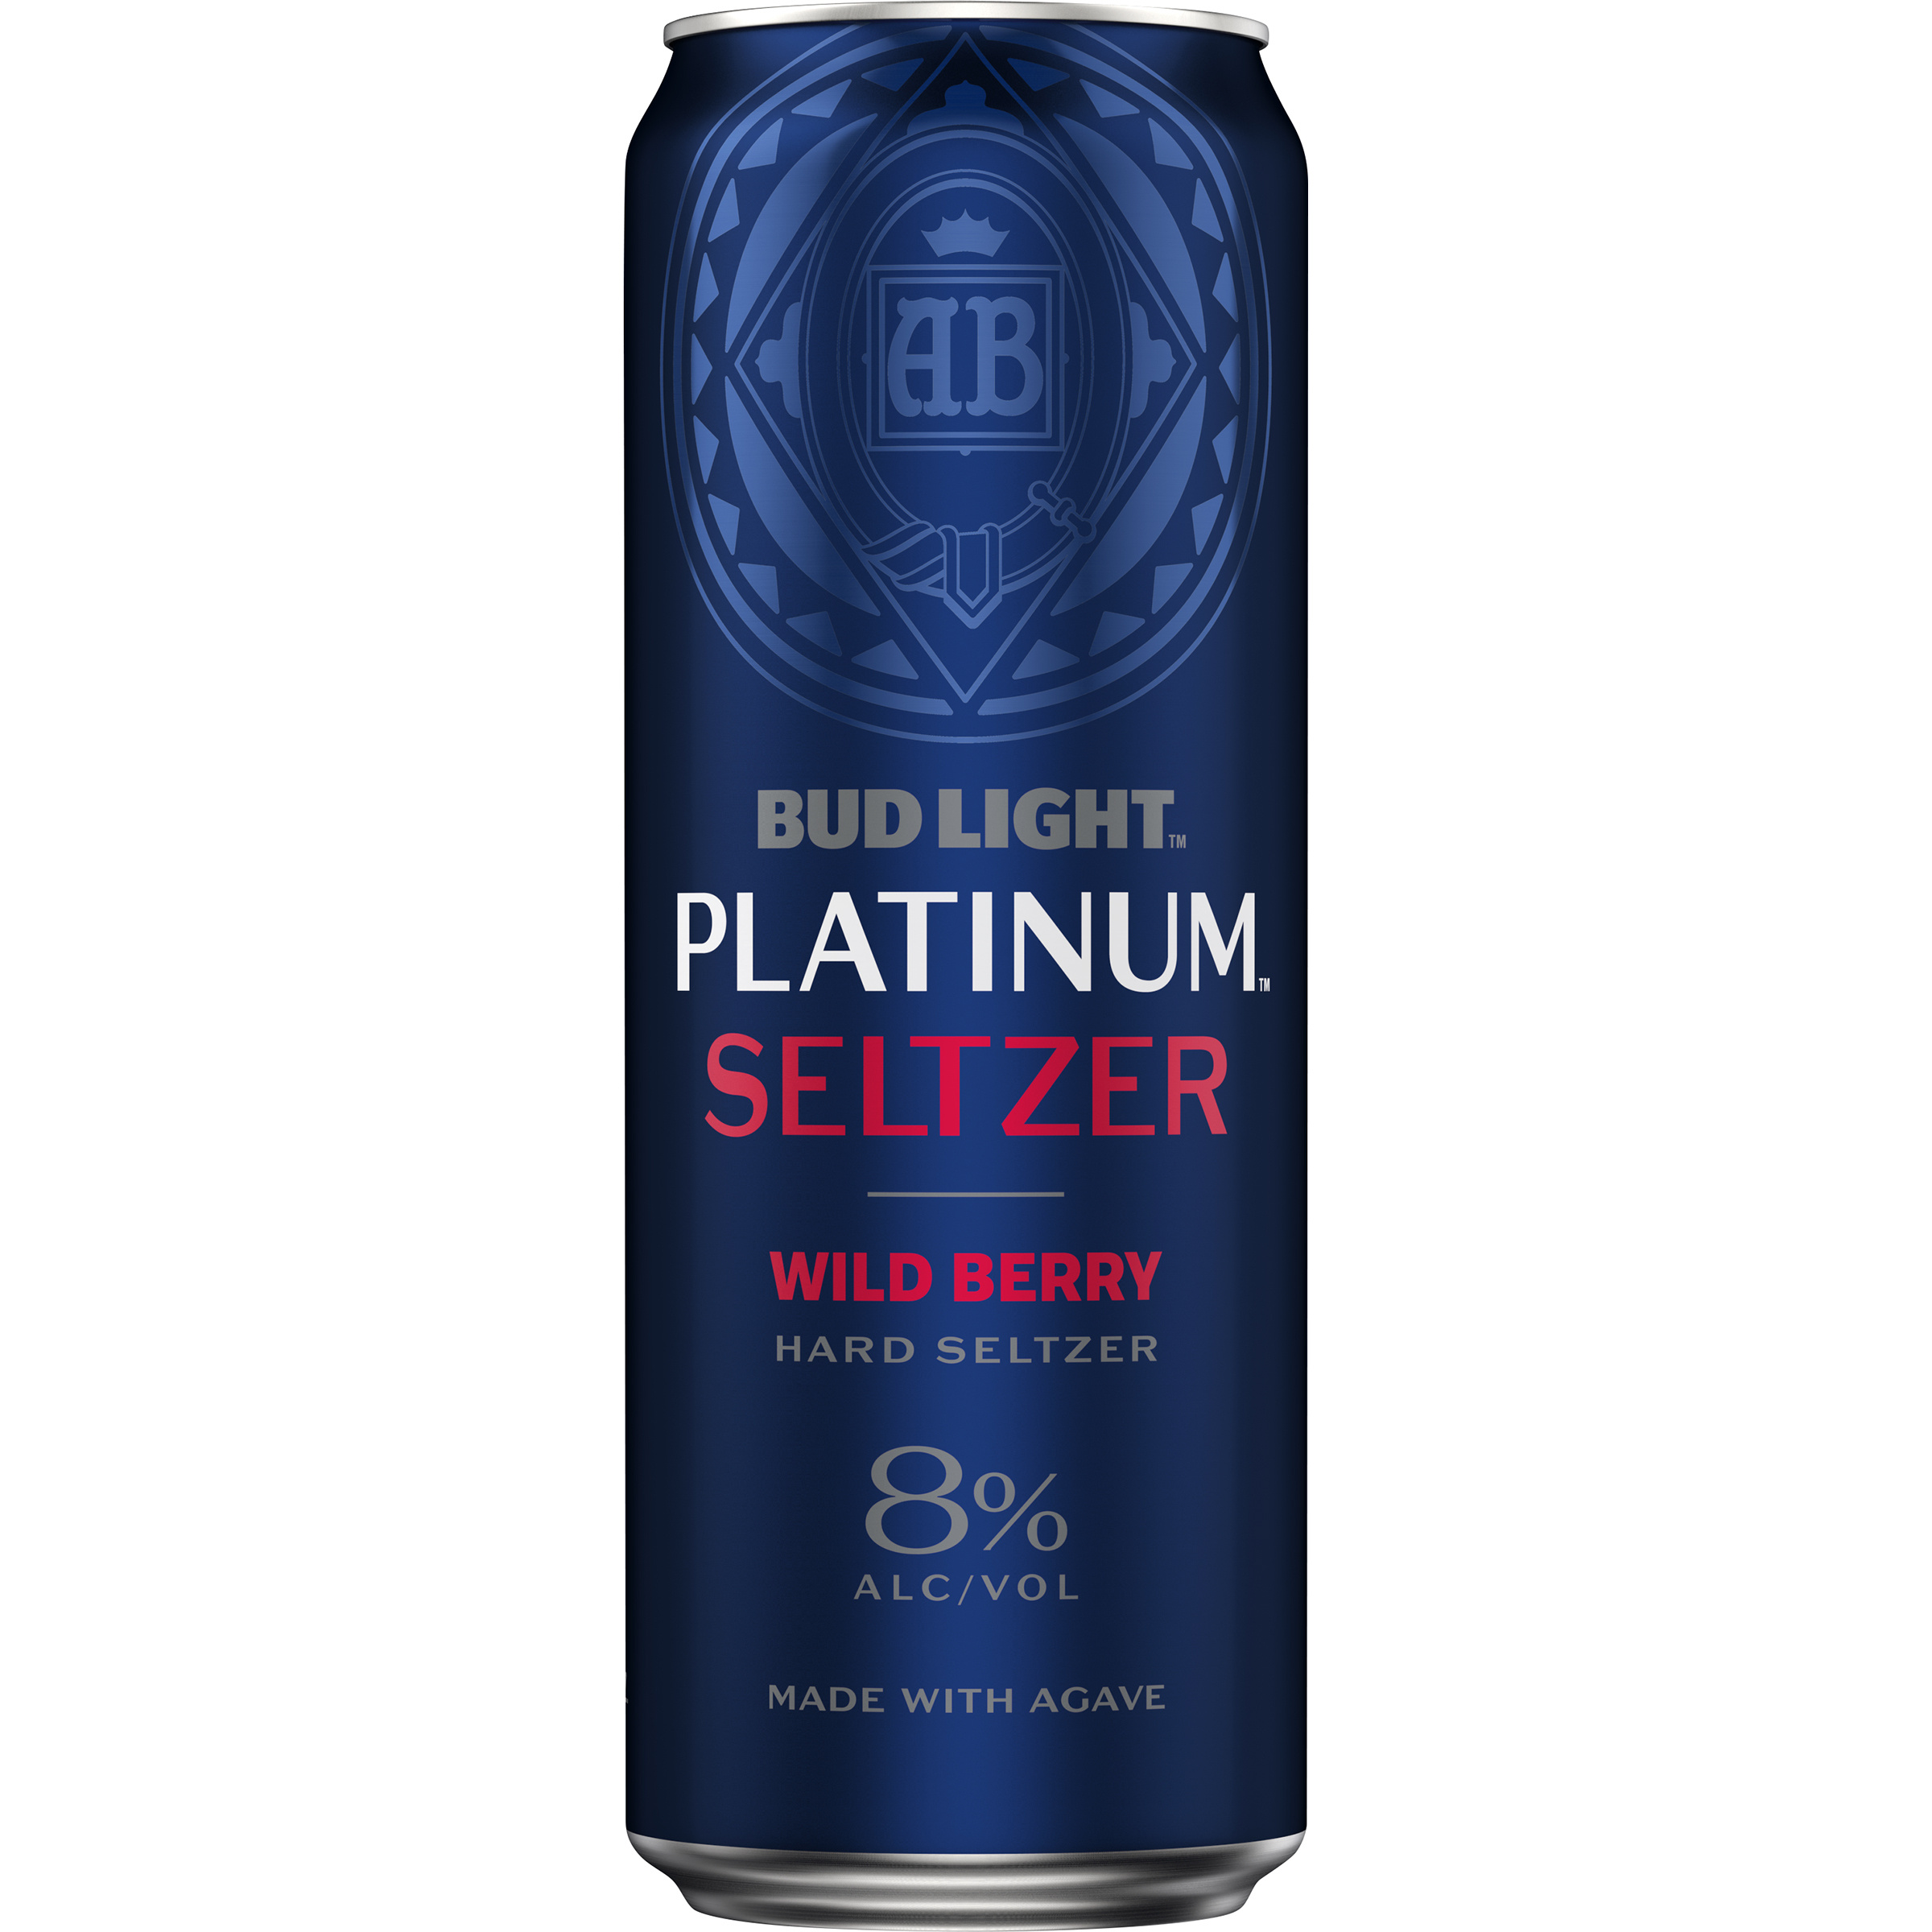 Bud Light Platinum Seltzer Wild Berry Hard - Beer - 25oz Can